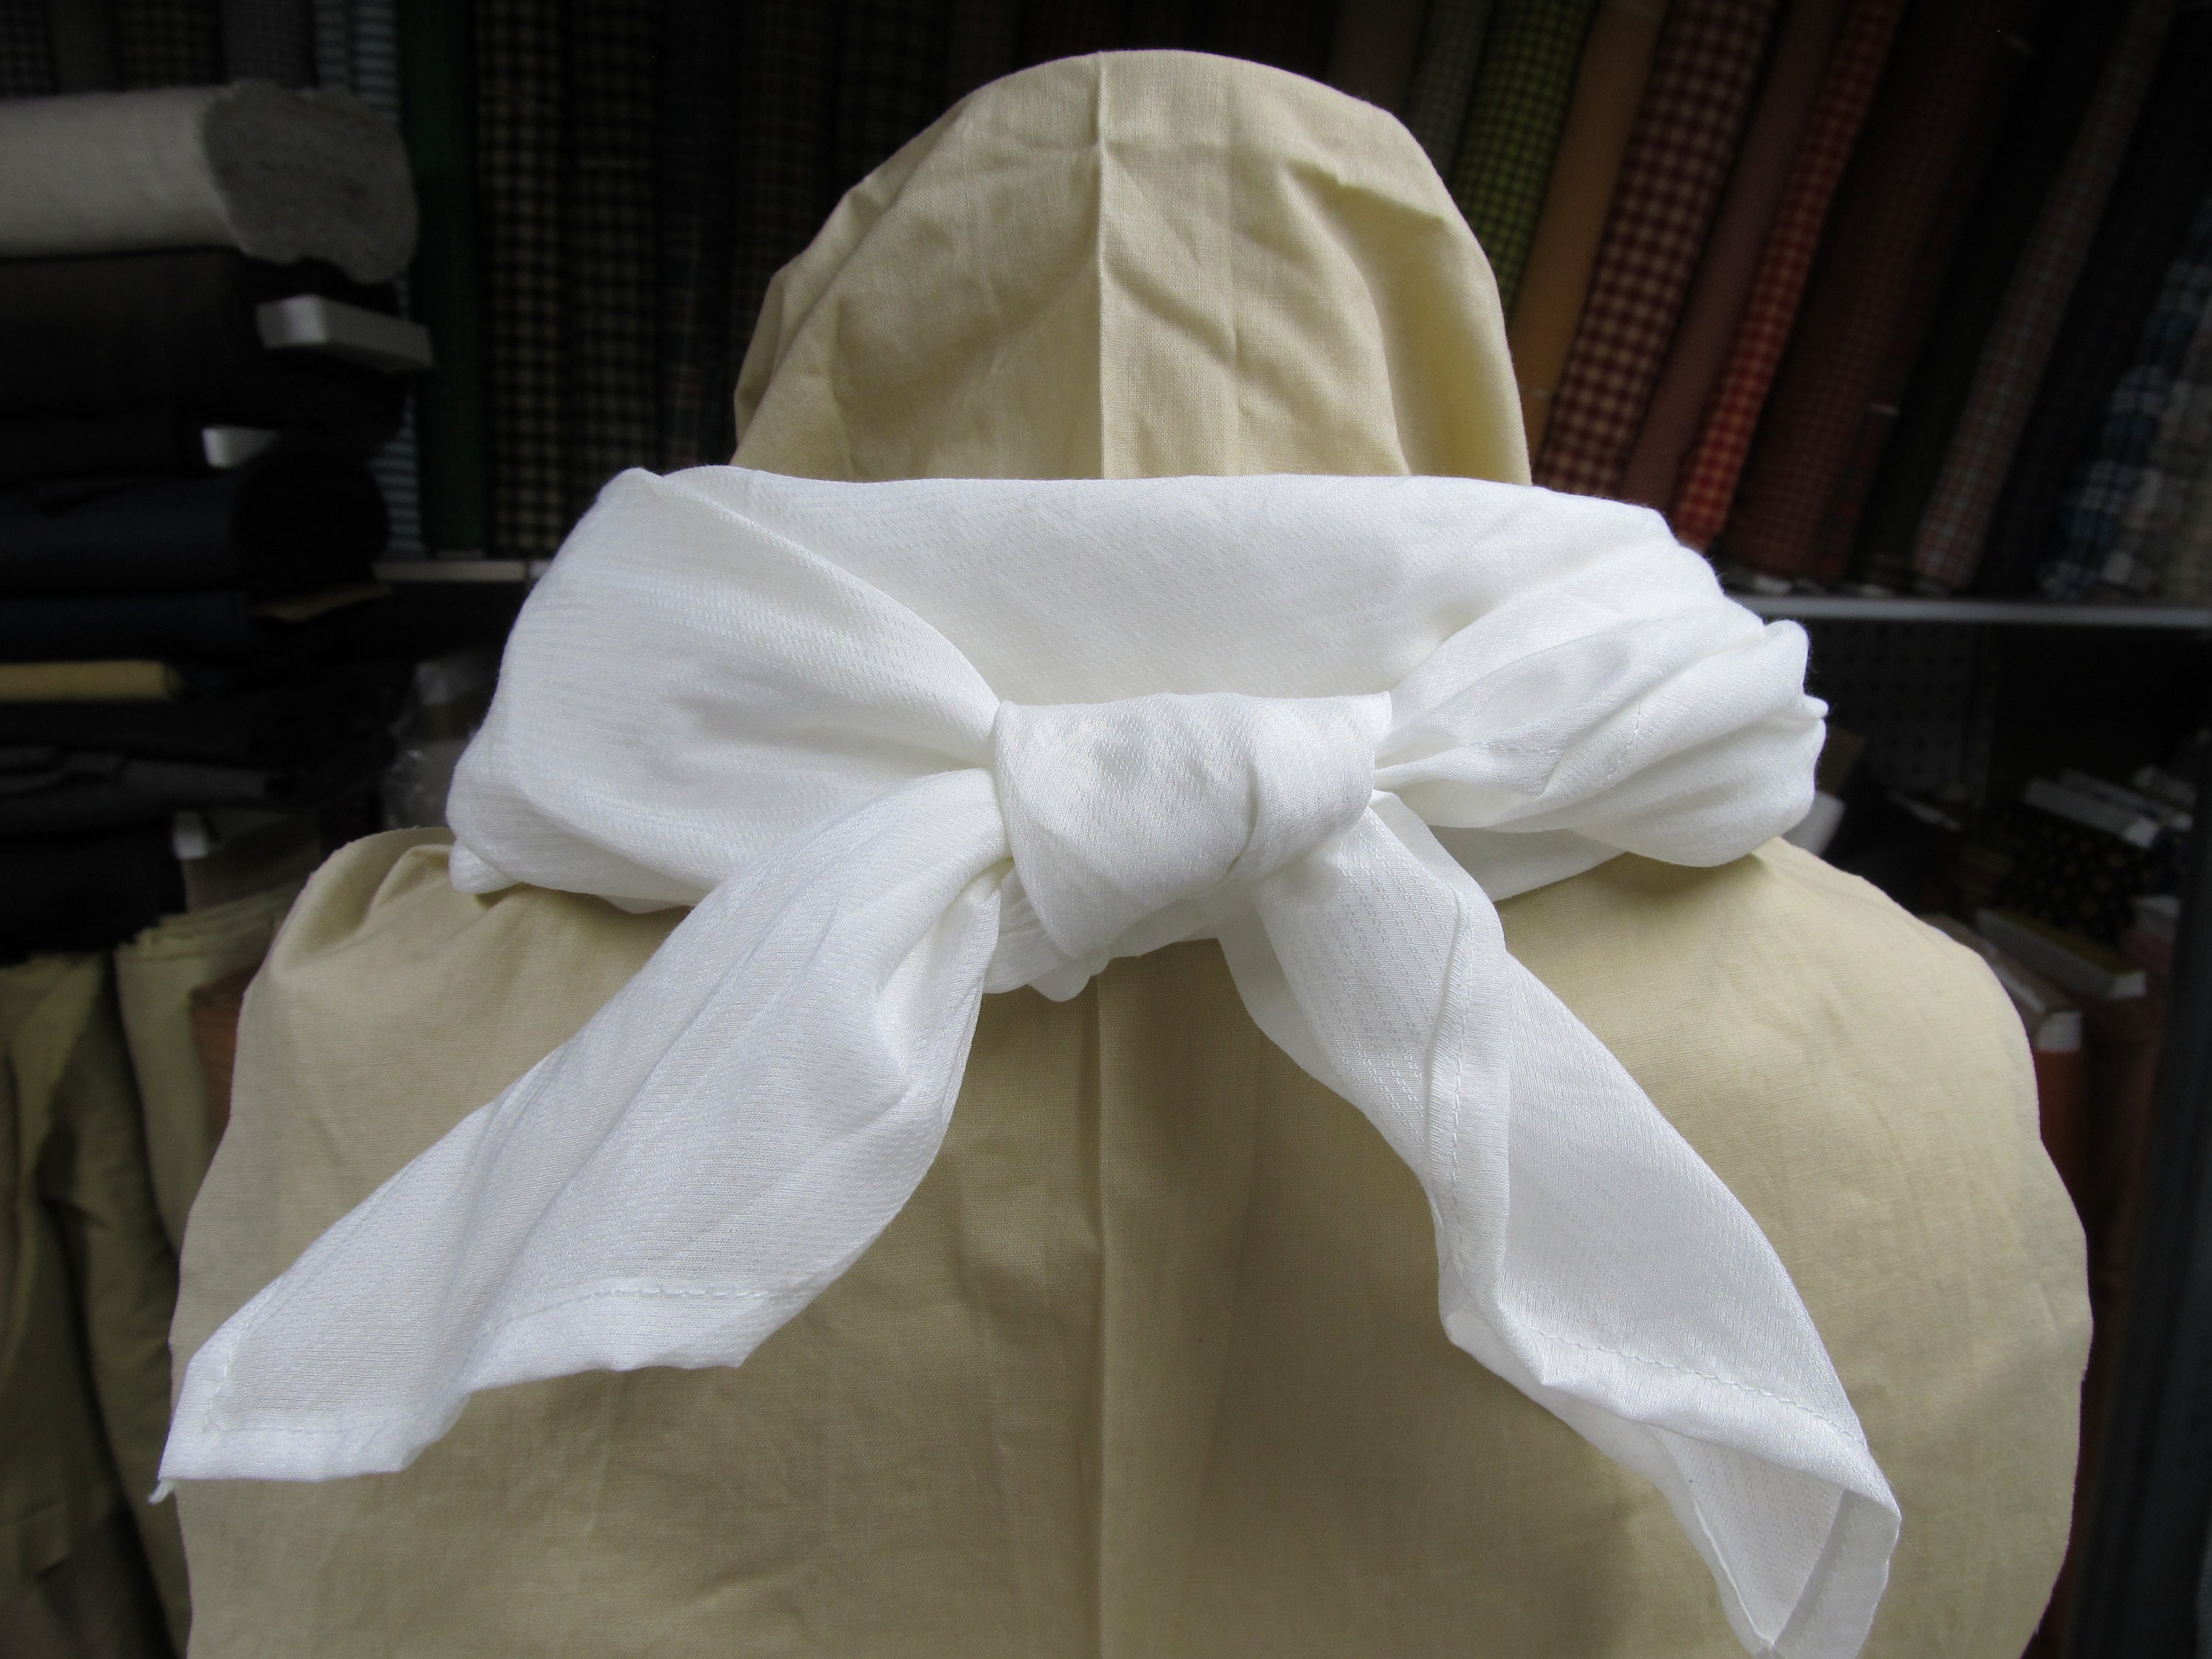 Cravat/Ascot - Silk/Cotton Blend Necktie Regency Era Reenacting/Reenacment Historic Victorian Tie 43 Square Black Or White